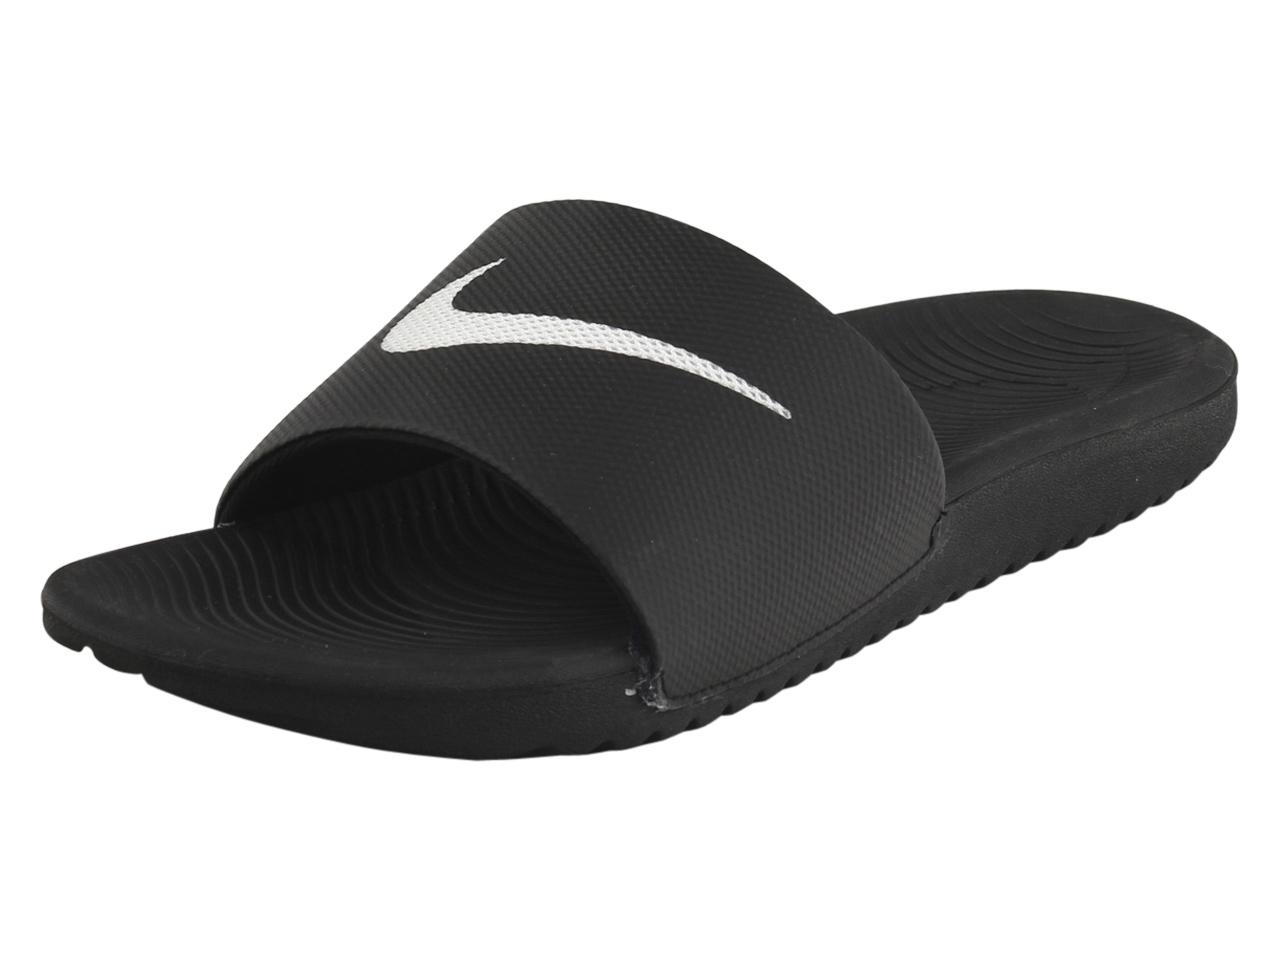 Nike Men's Kawa Slides Sandals Shoes - Black - 8 D(M) US